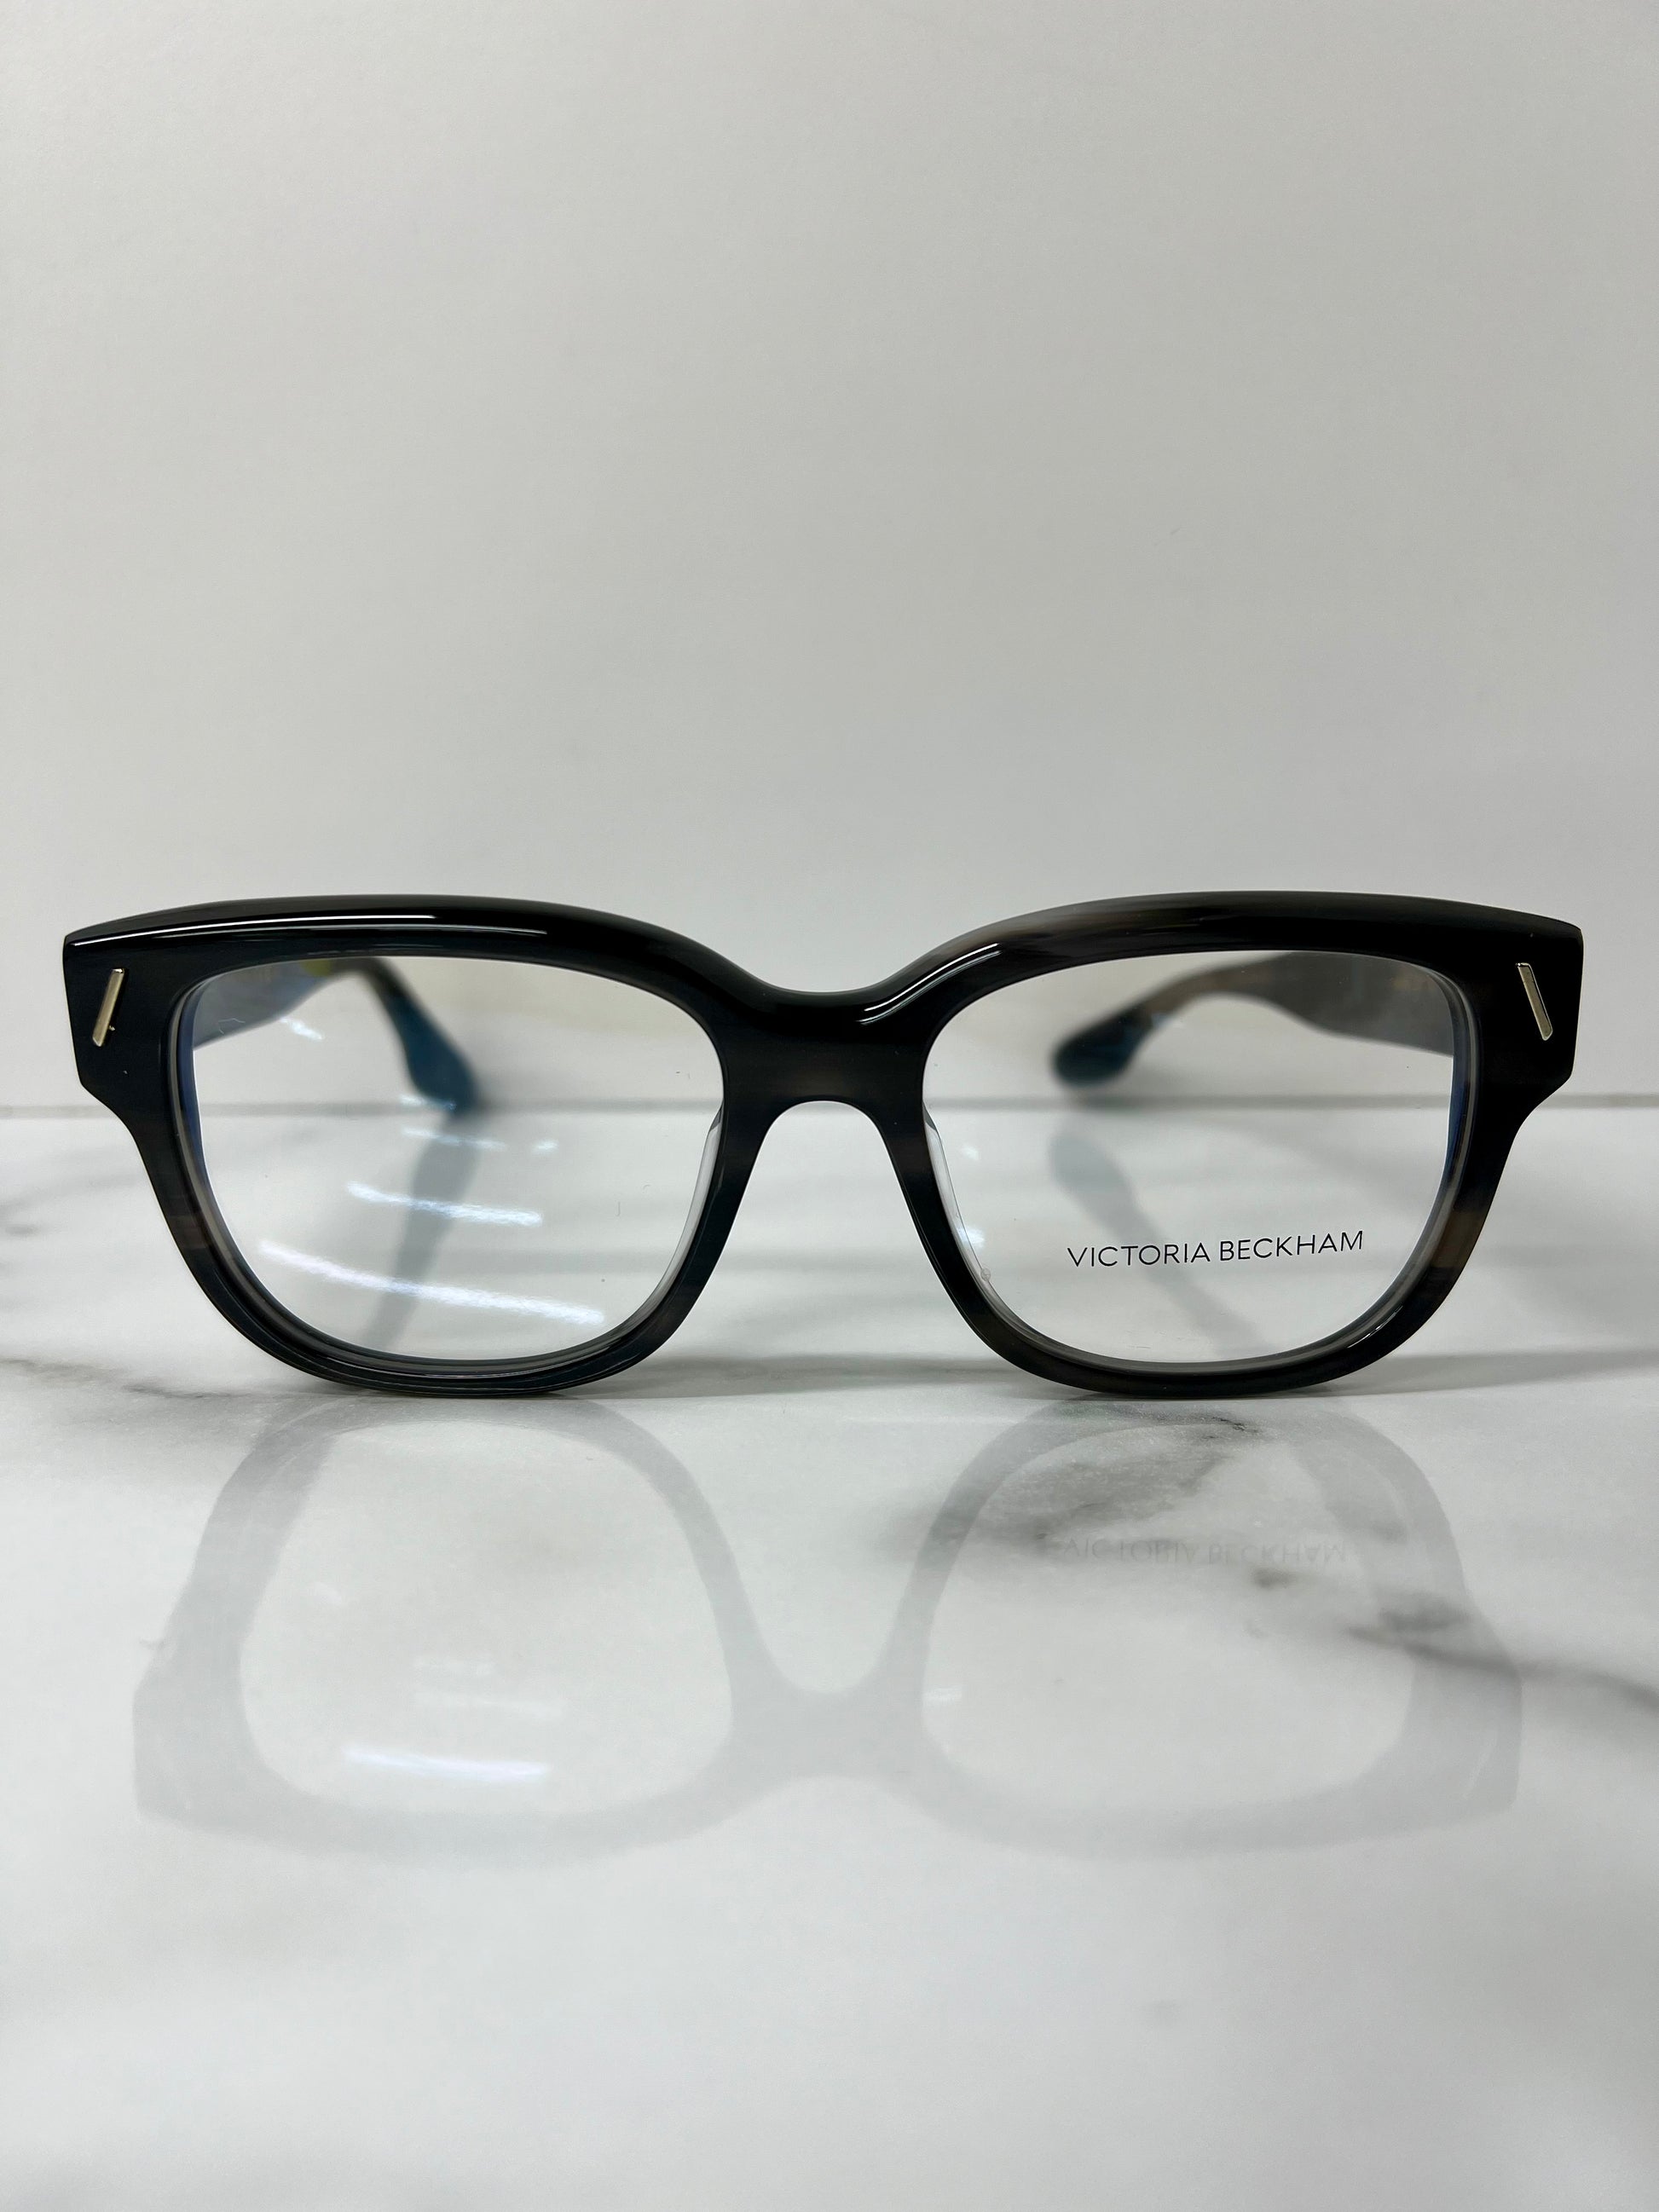 Victoria Beckham Glasses Frames Optical Women Black Acetate Eyeglasses VB2639